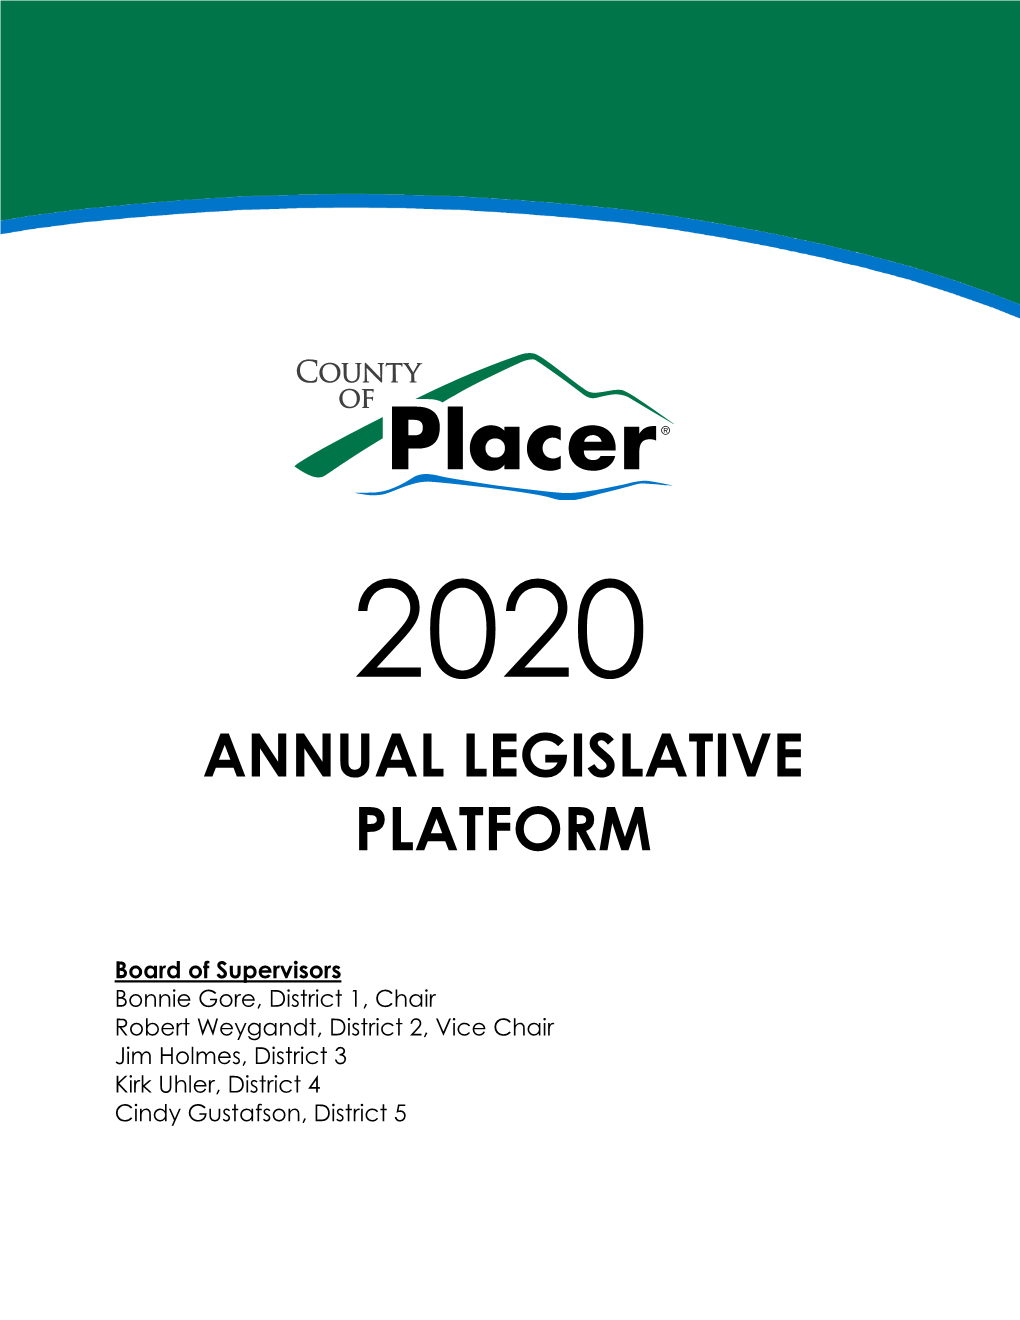 Annual Legislative Platform